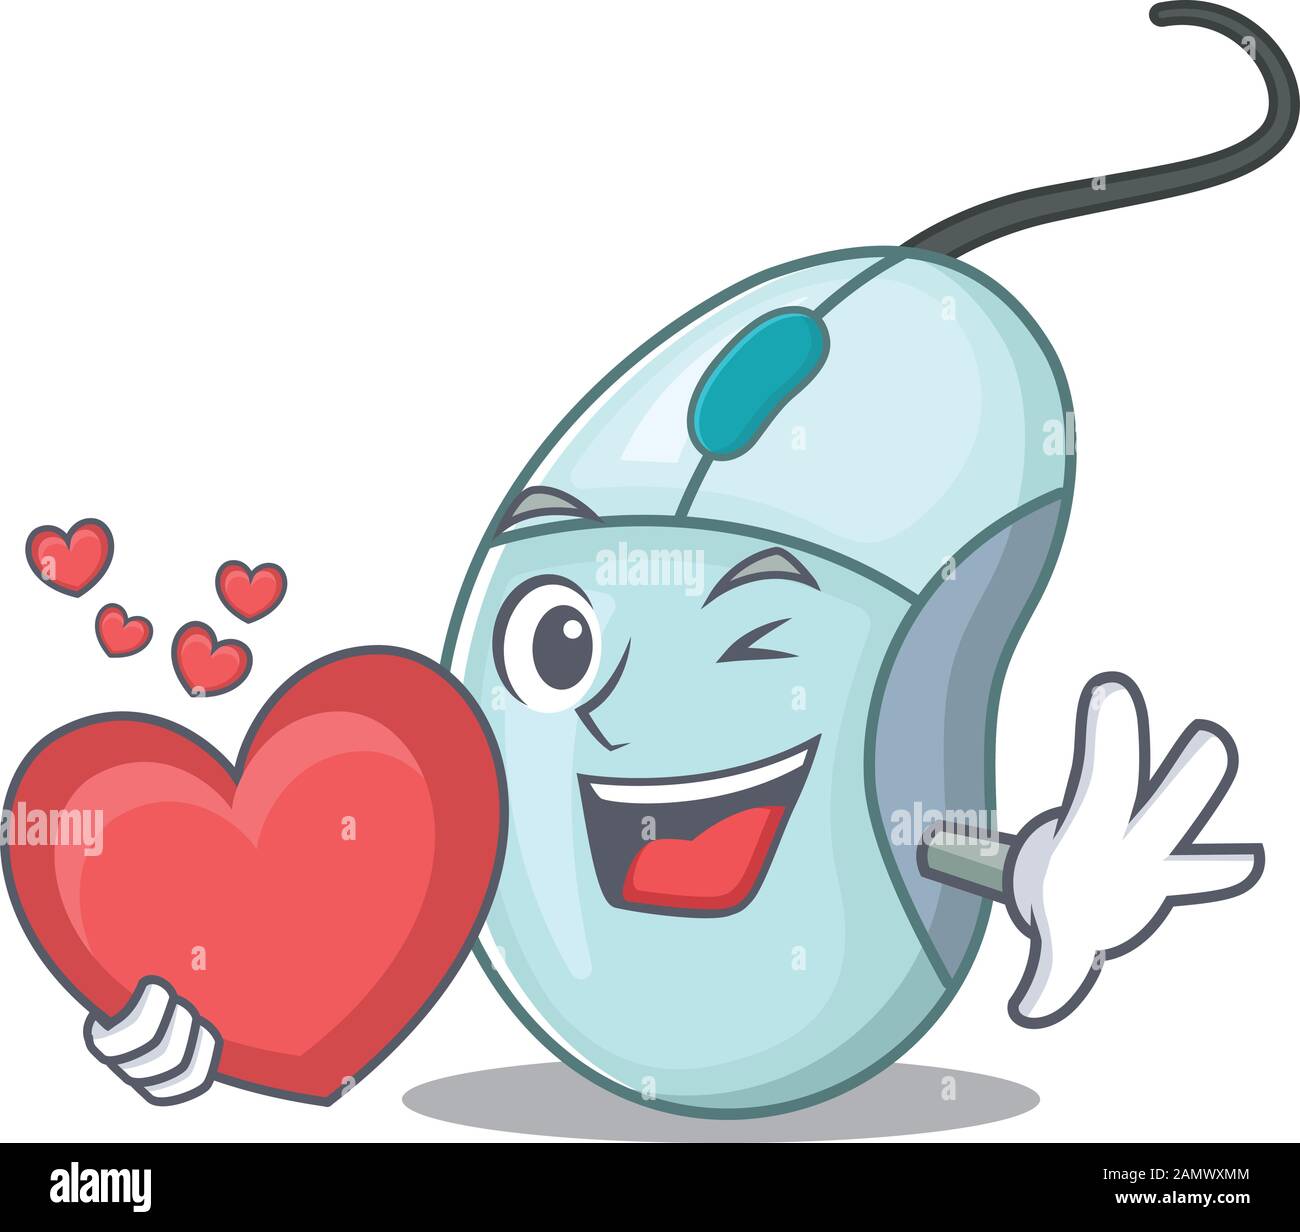 https://c8.alamy.com/comp/2AMWXMM/funny-face-computer-mouse-cartoon-character-holding-a-heart-2AMWXMM.jpg